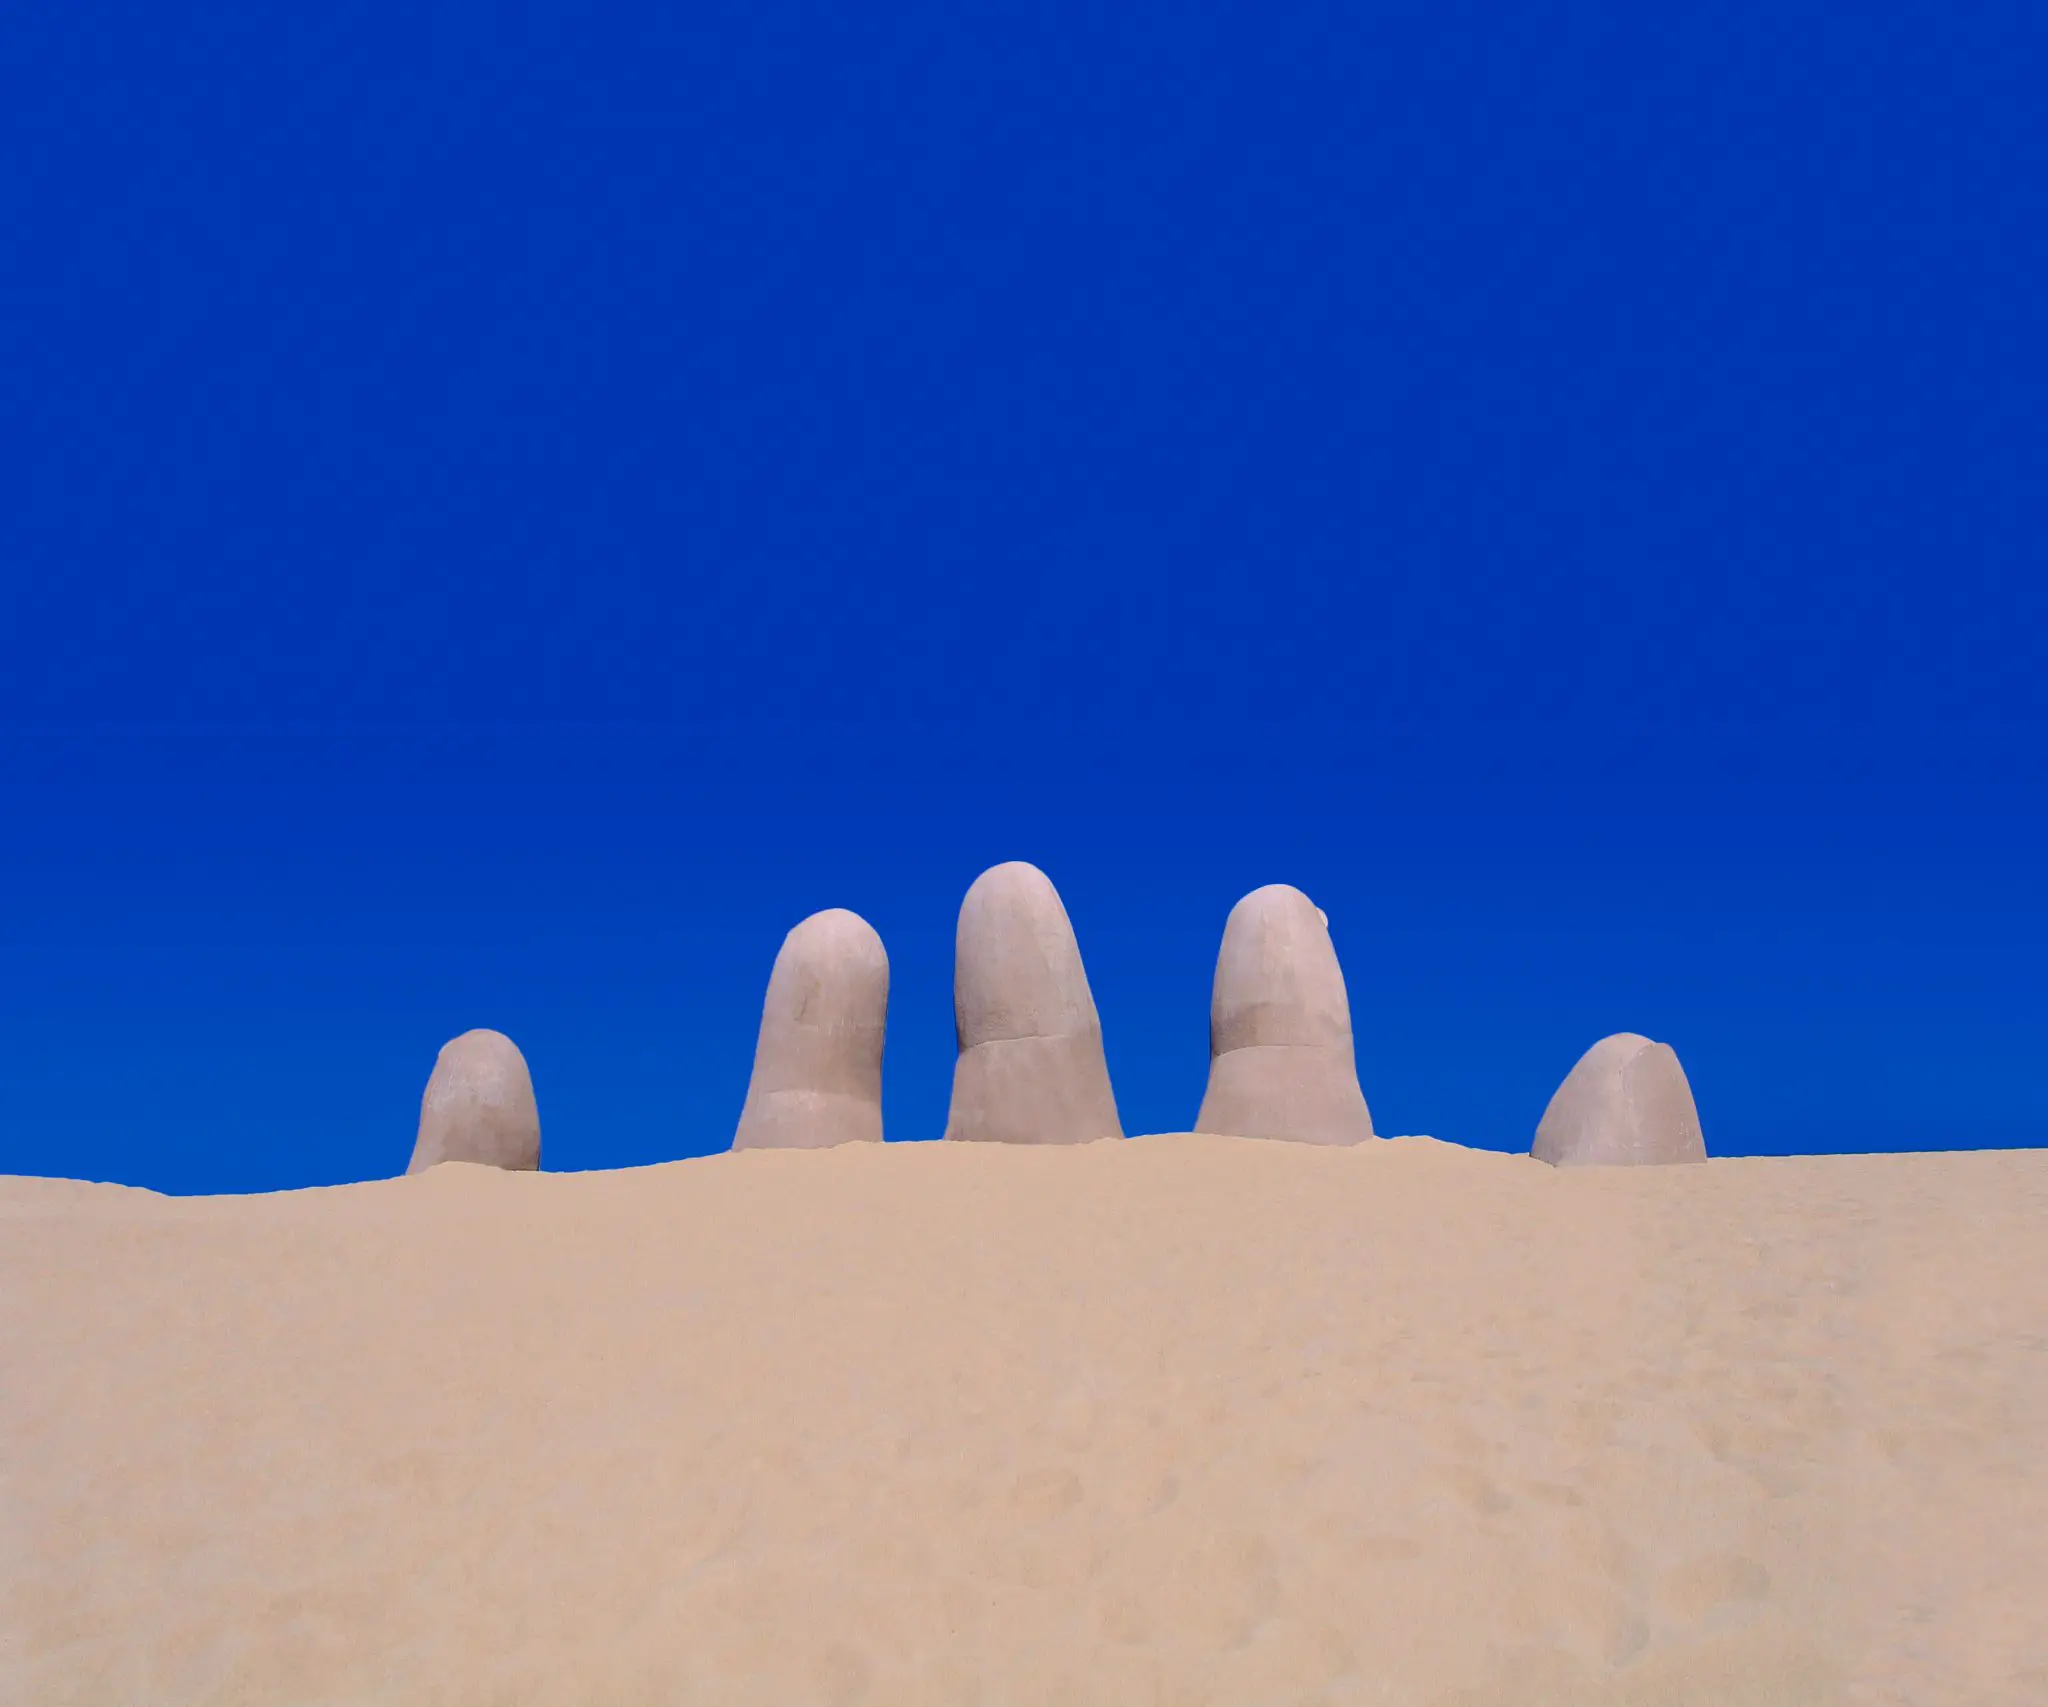 Beach sculpture, Punta del Este, Uruguay